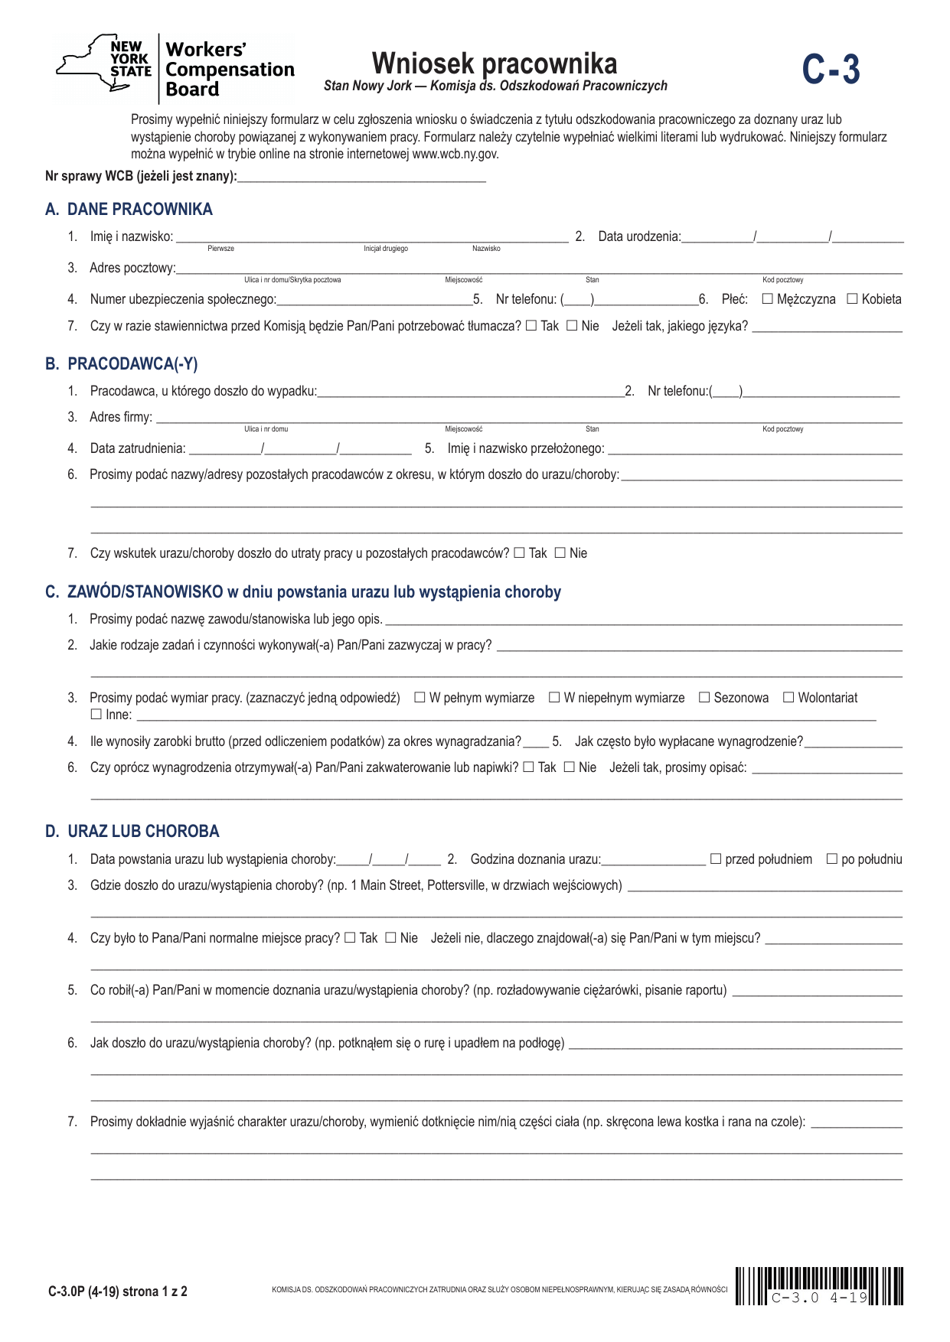 Form C-3P Employee Claim - New York (Polish), Page 1